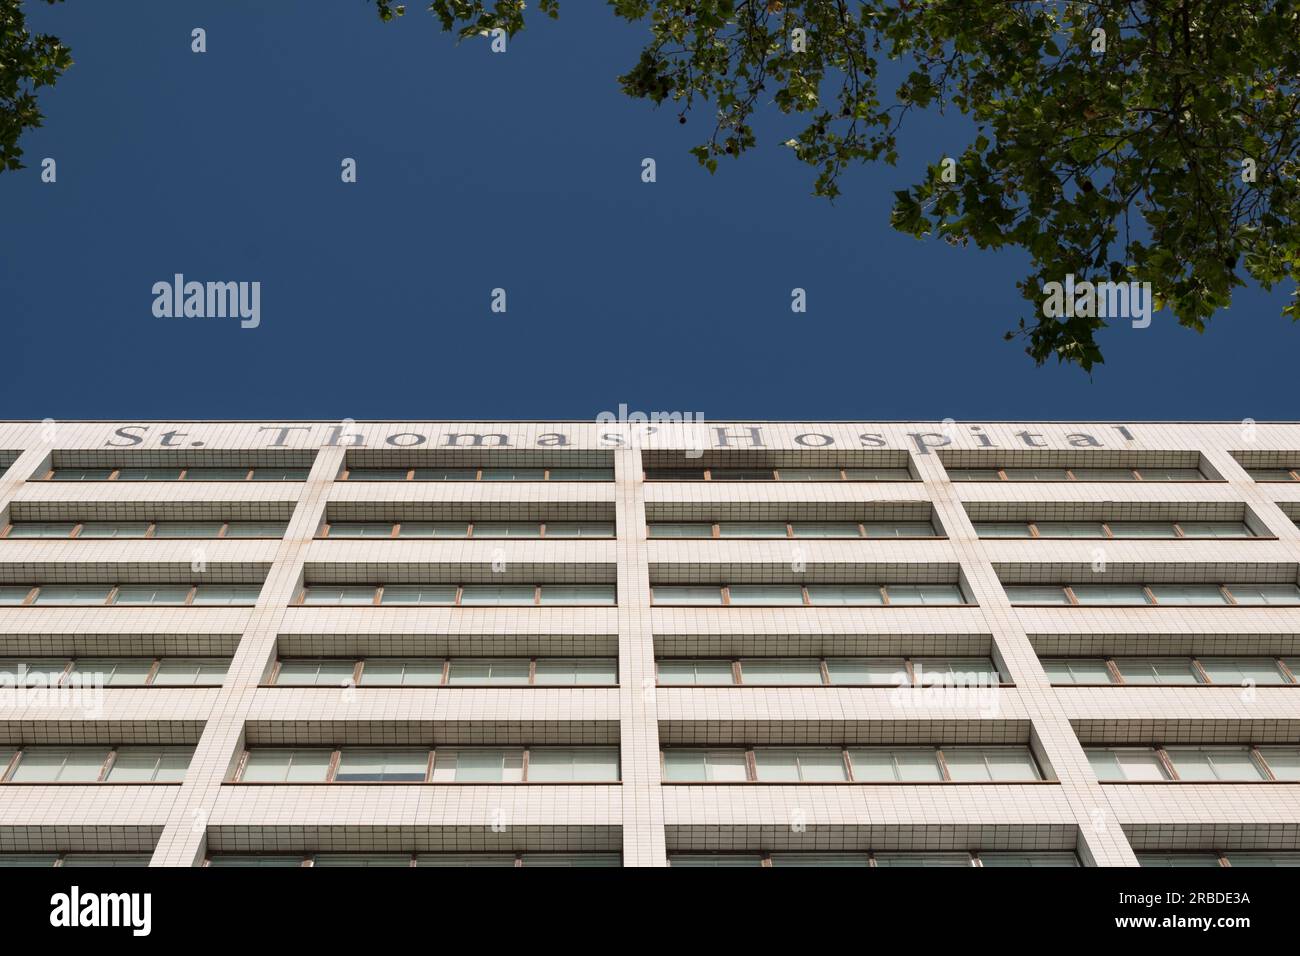 Die Fassade des St. Thomas' Hospital South Wing Building and Lettering, Lambeth, London, England, Großbritannien Stockfoto